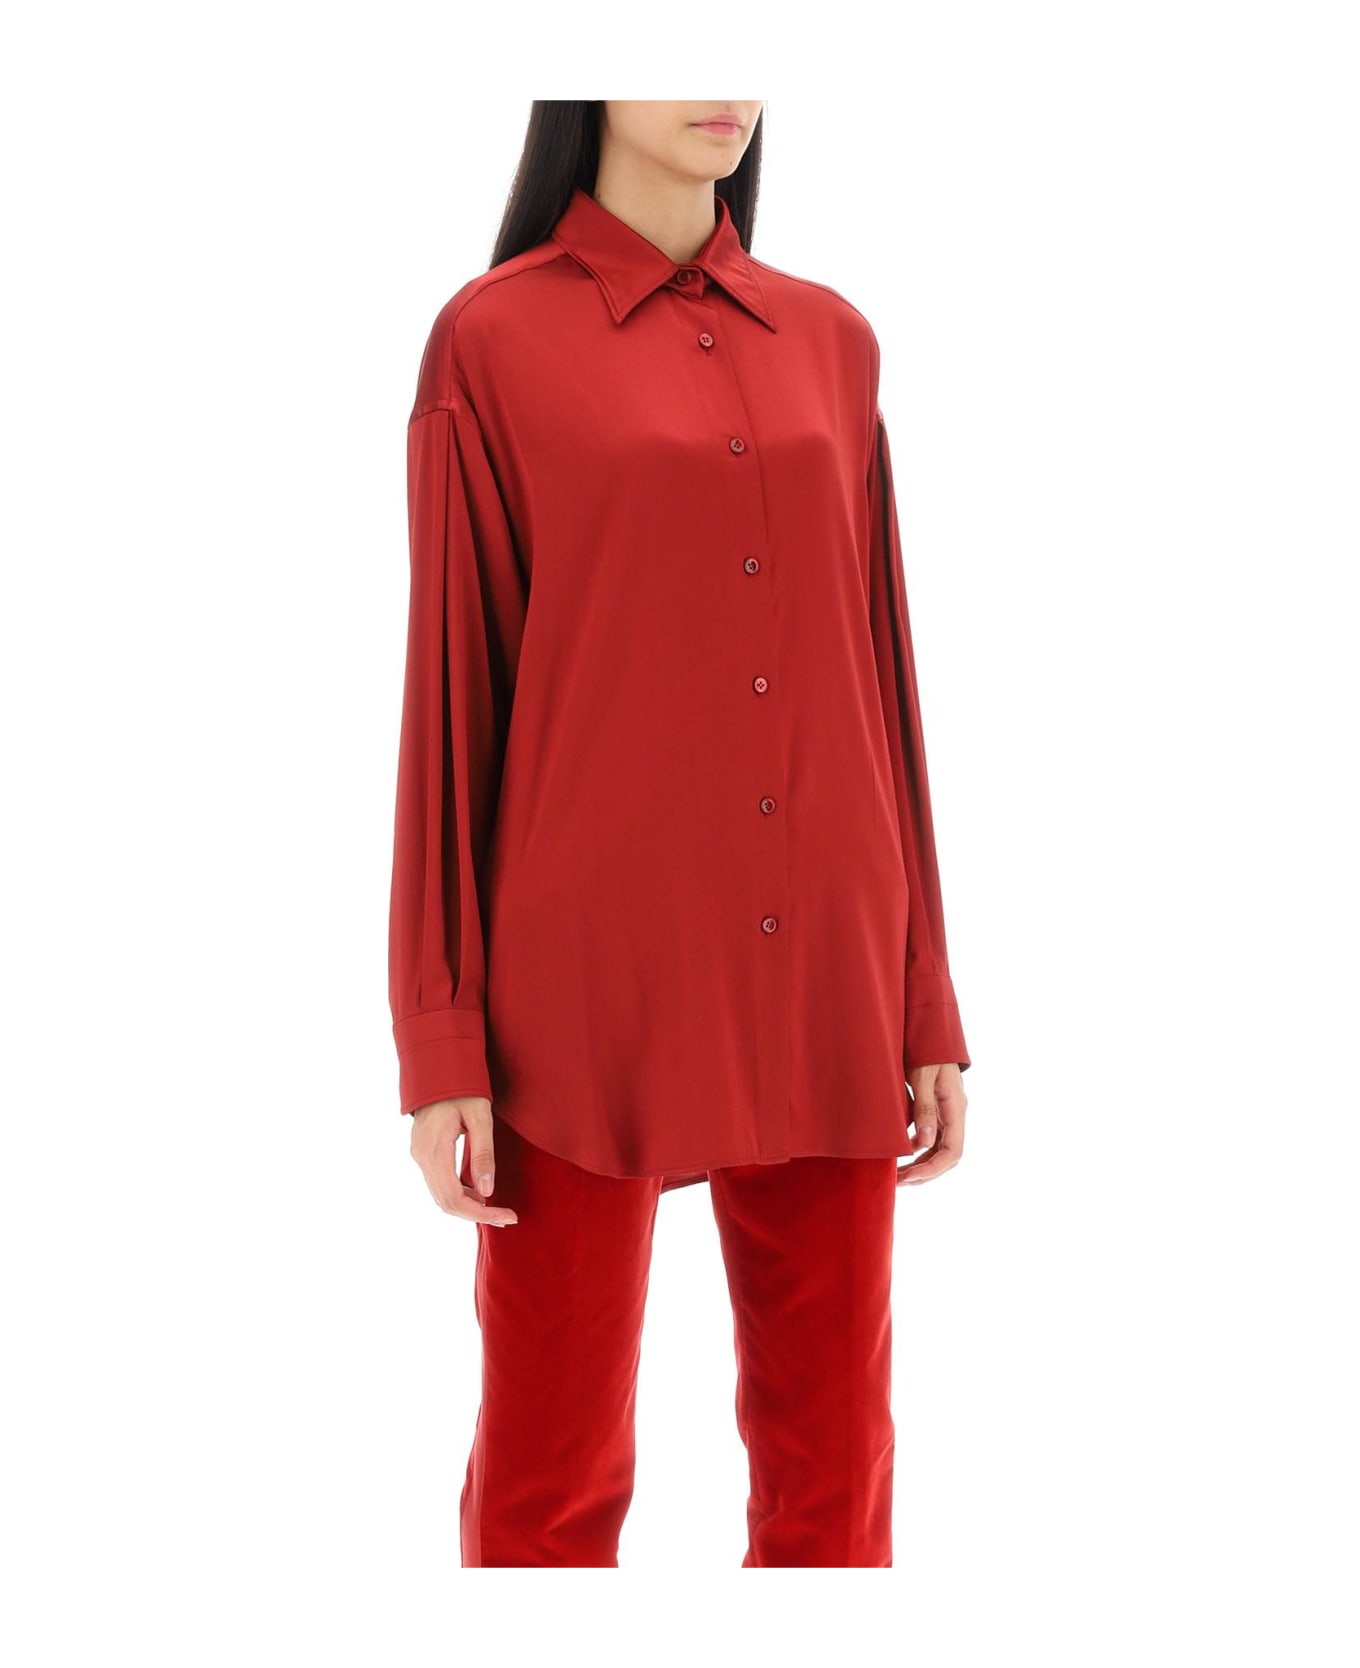 Tom Ford Stretch Silk Satin Shirt - OXBLOOD RED (Red) シャツ